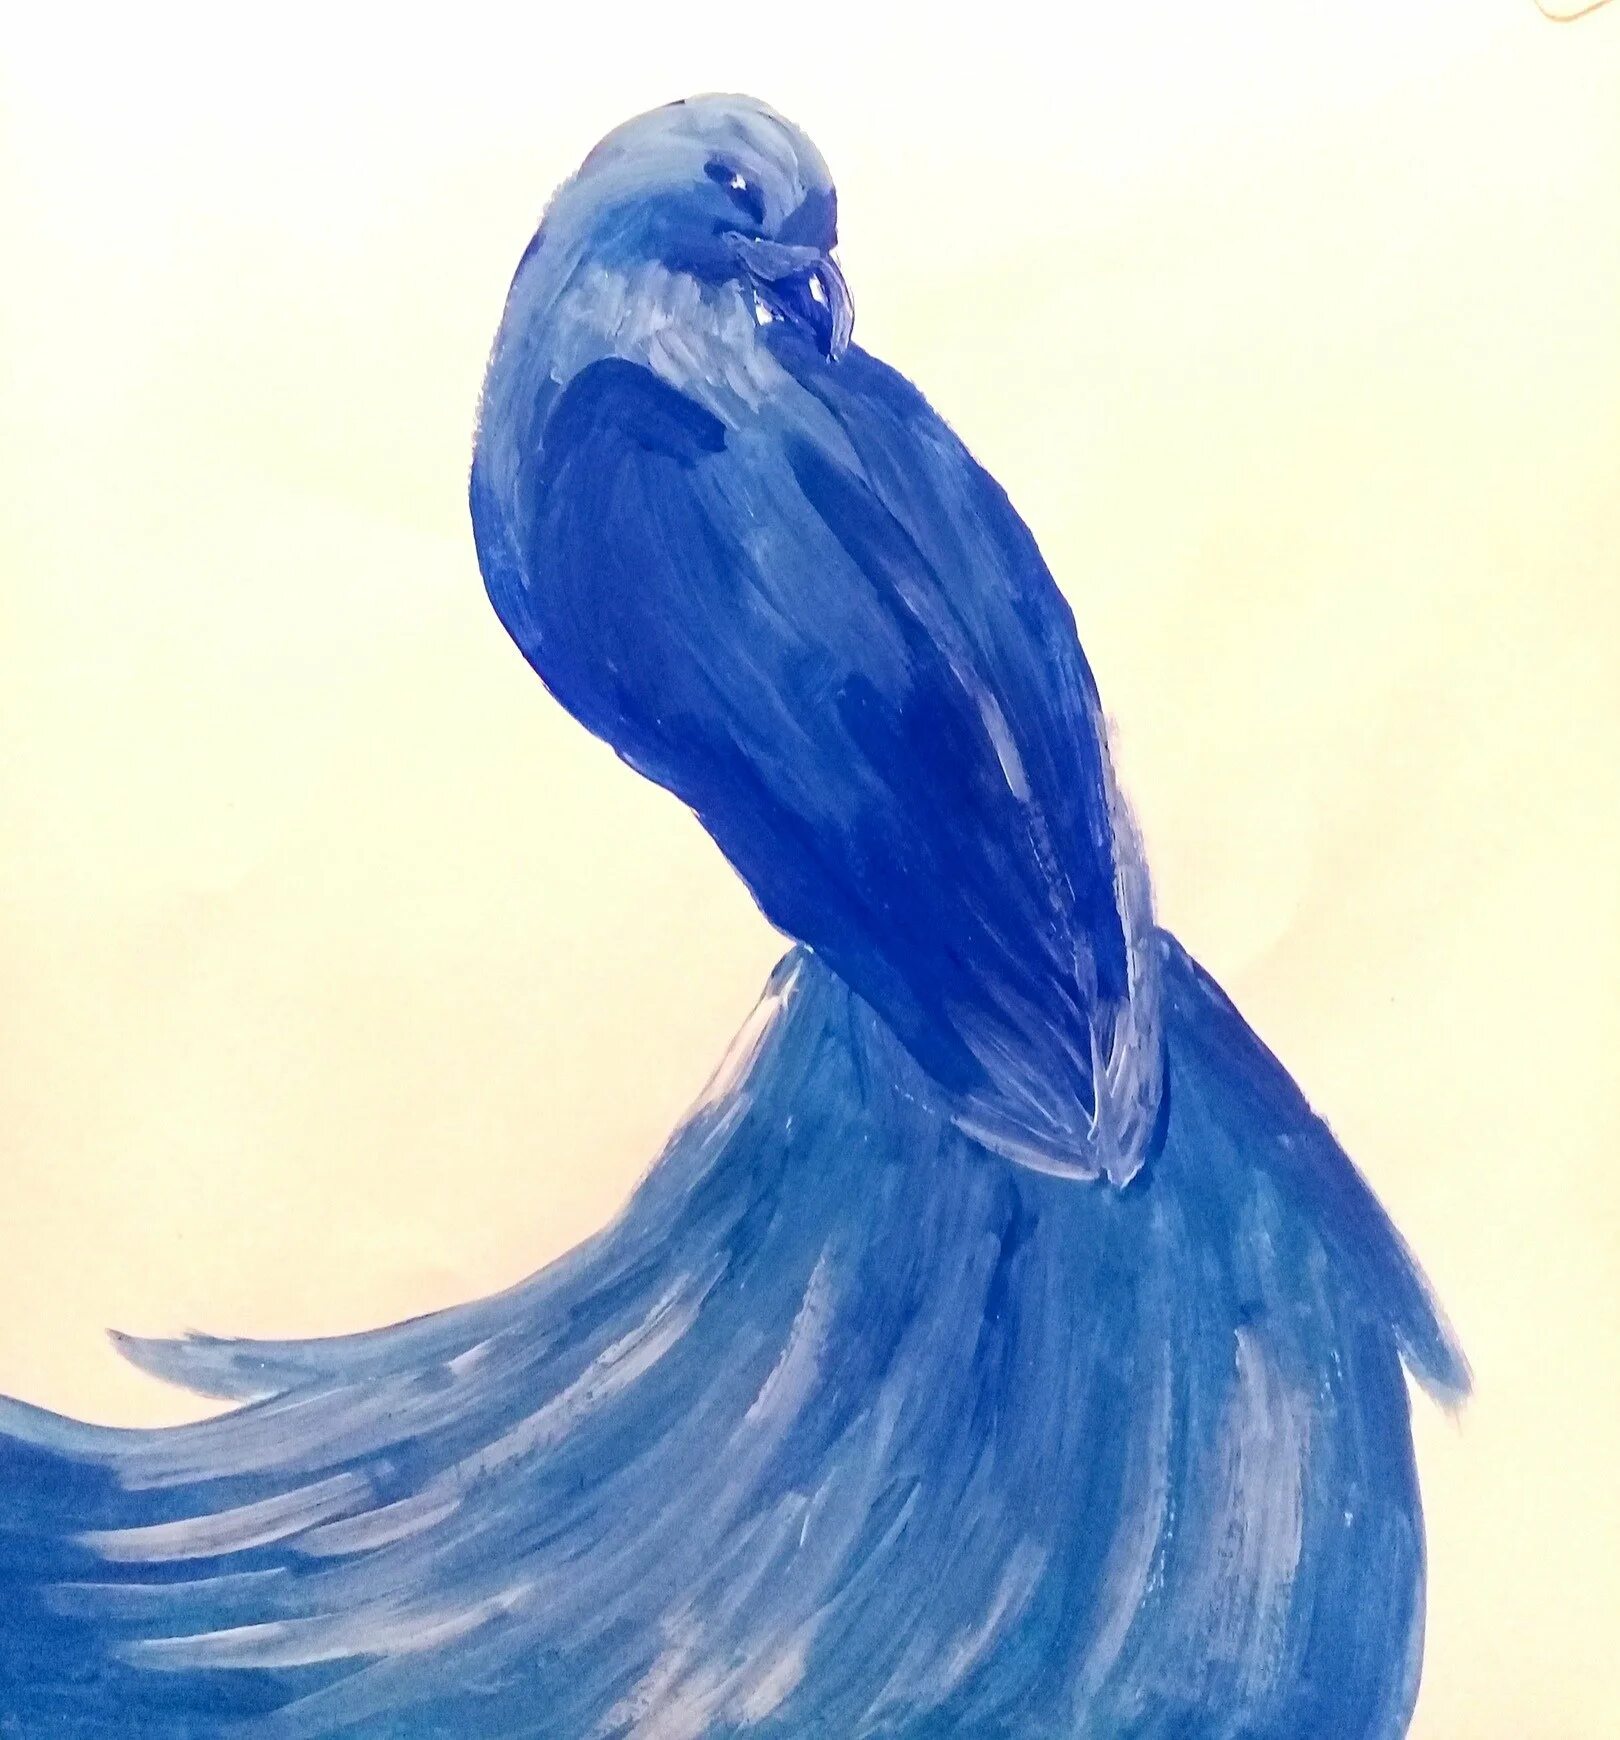 Синяя птица д. Синяя птица Метерлинк. Синяя птица Метерлинк рисунок. Метерлинк синяя птица, царство будущего. Синяя птица Морис Метерлинк иллюстрации.